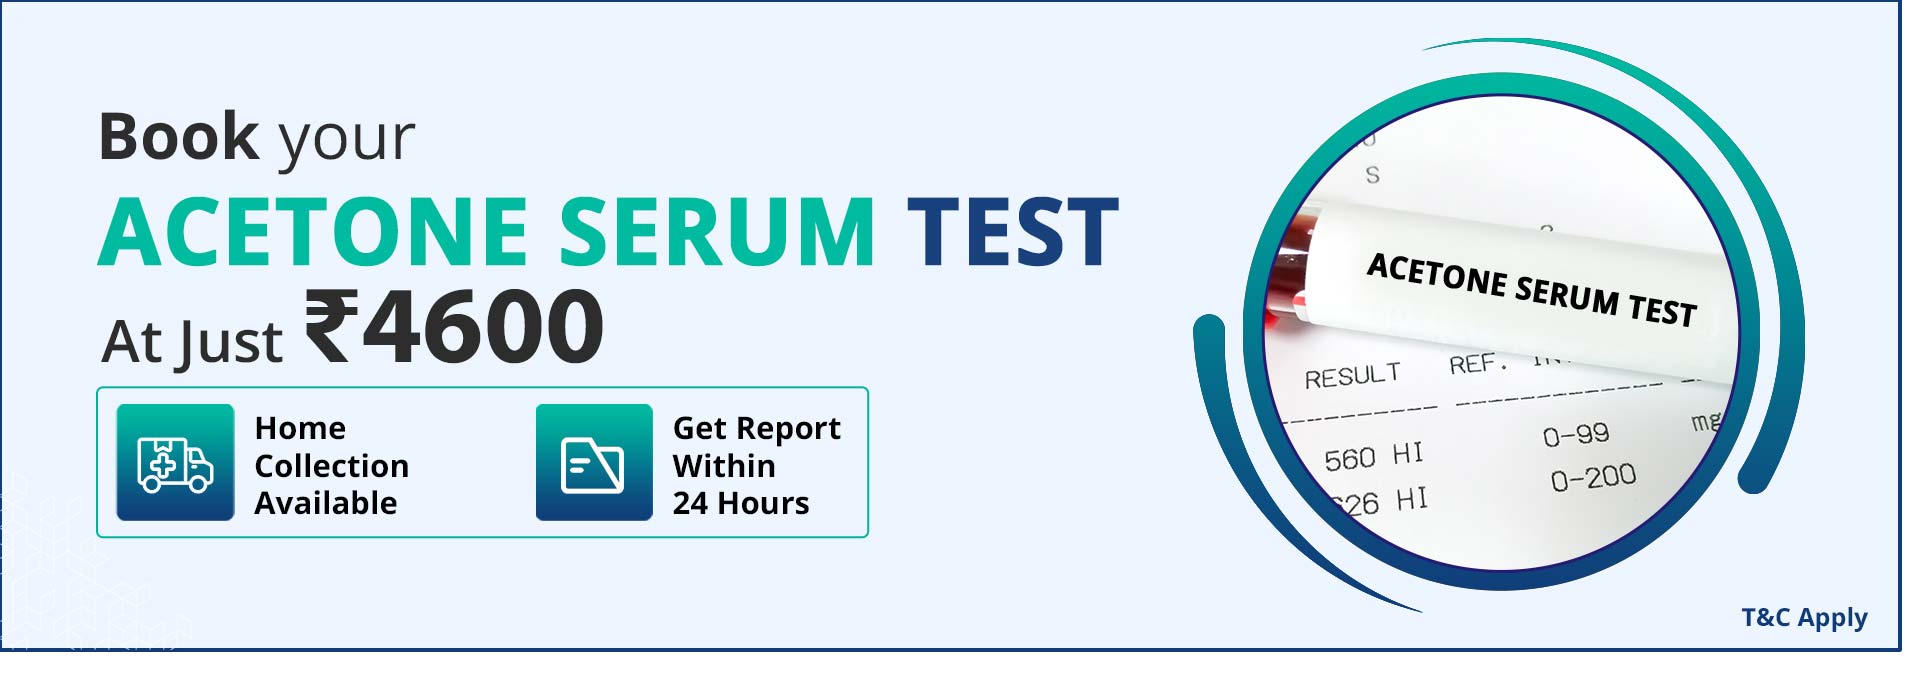 Acetone serum test